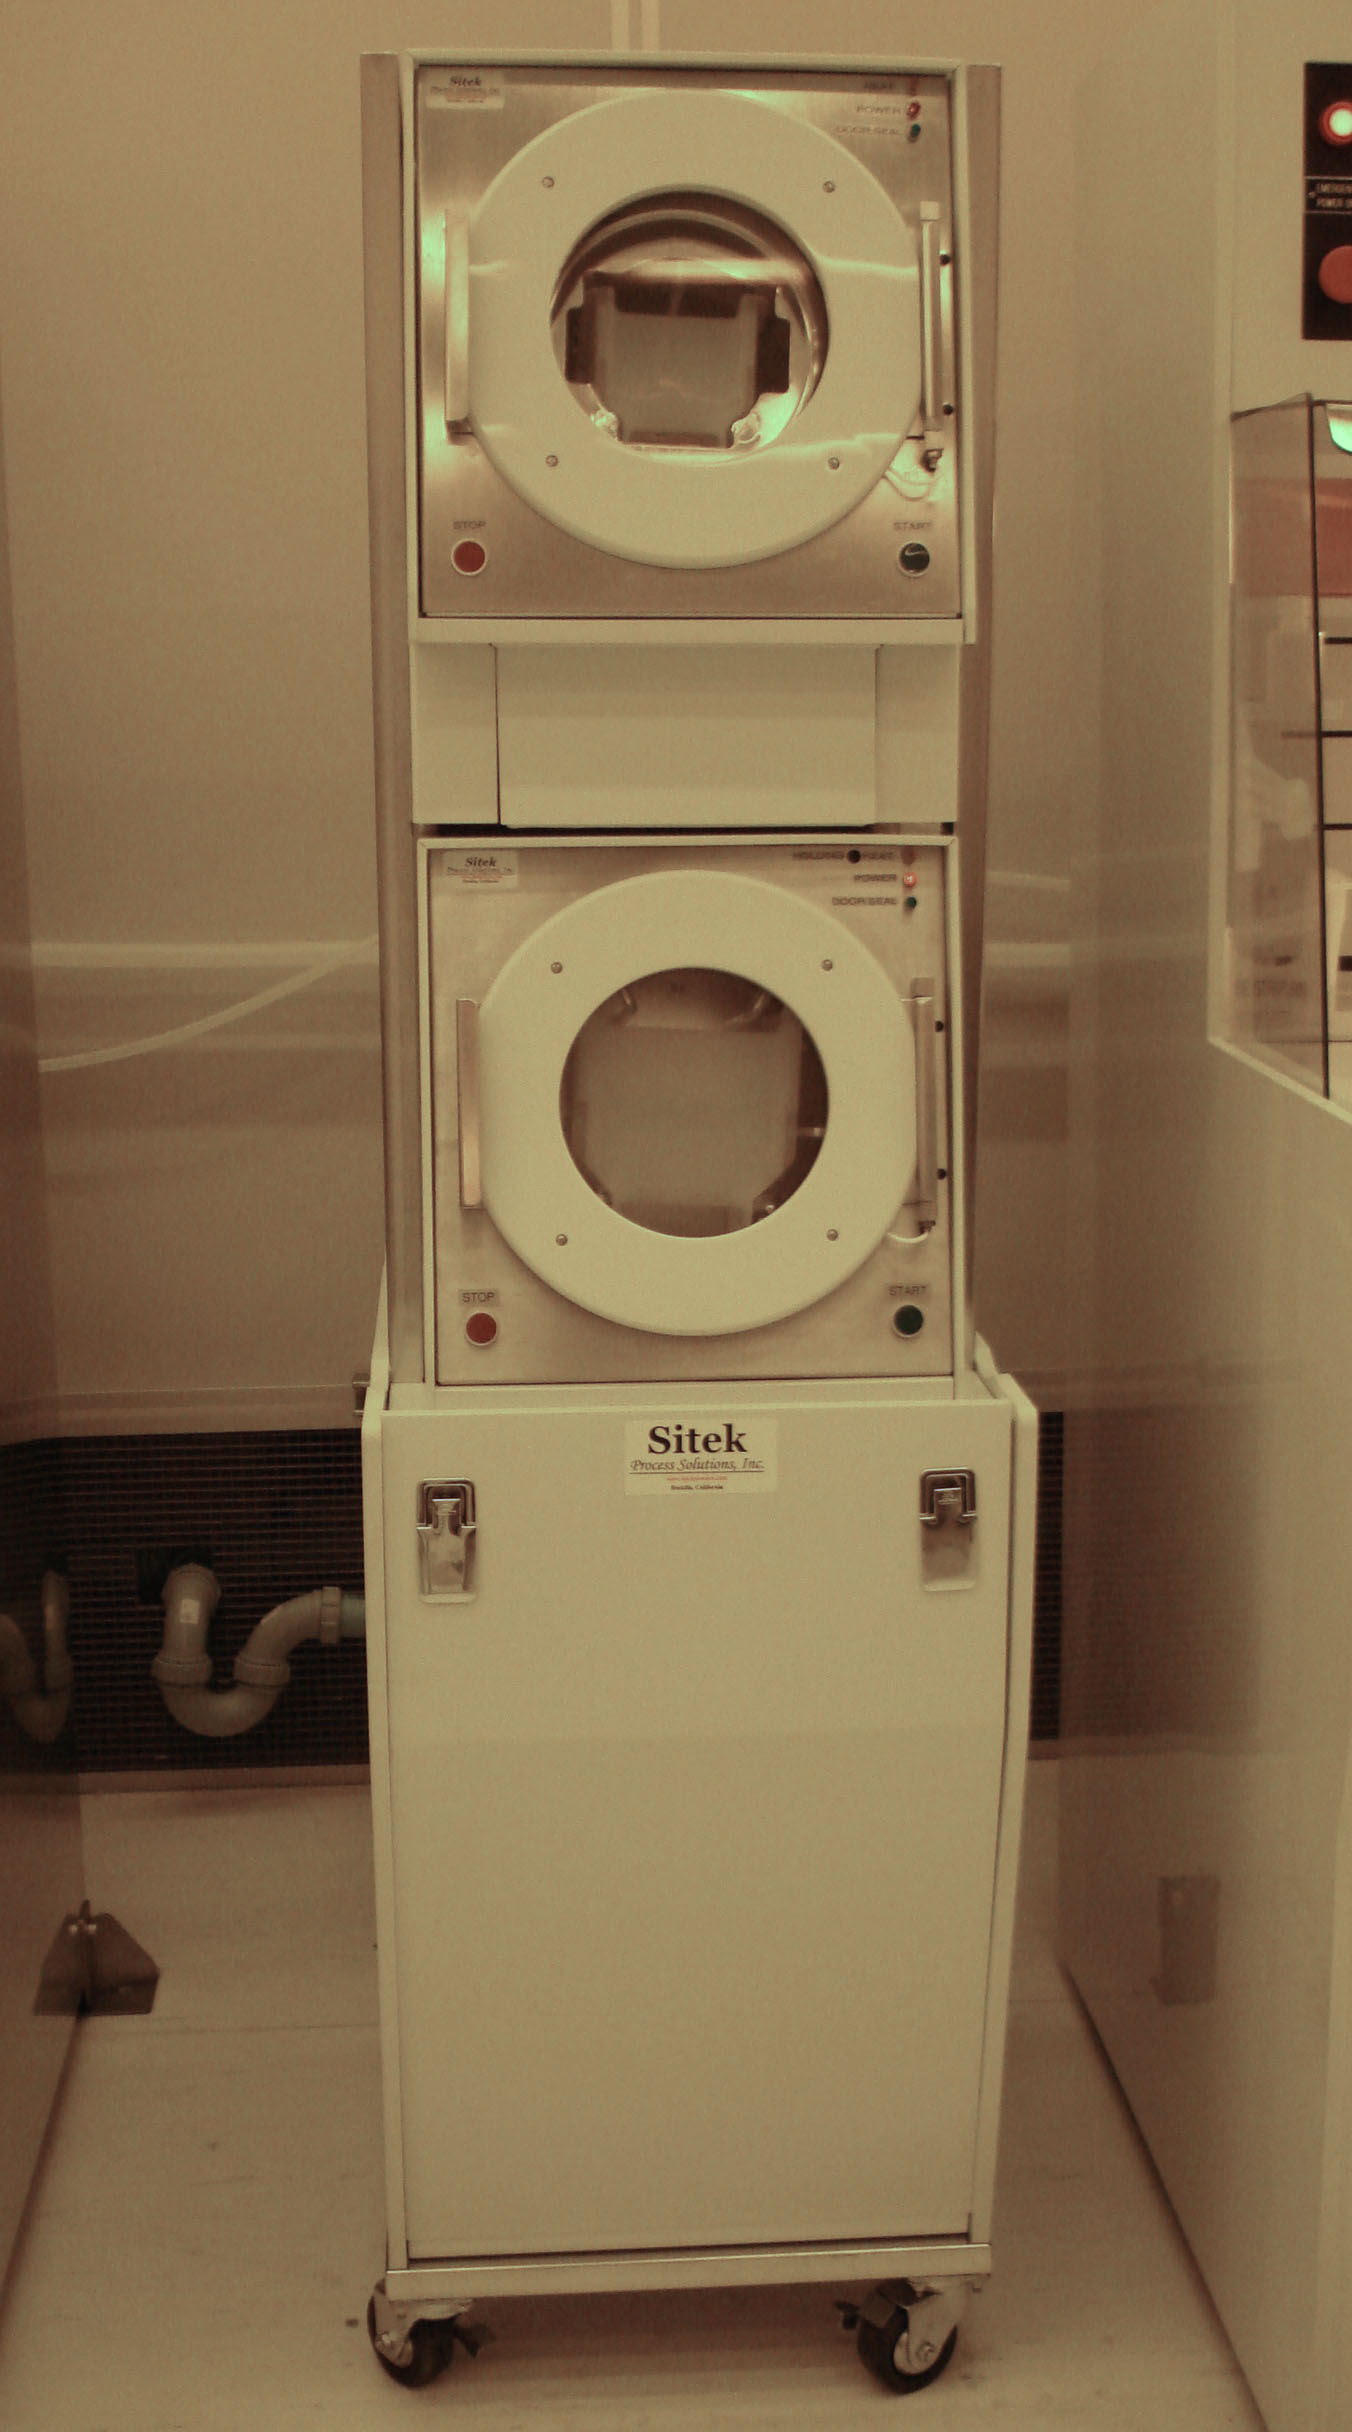 C_SRD_CNSI - Chem Spin Rinse Dryers (CNSI)